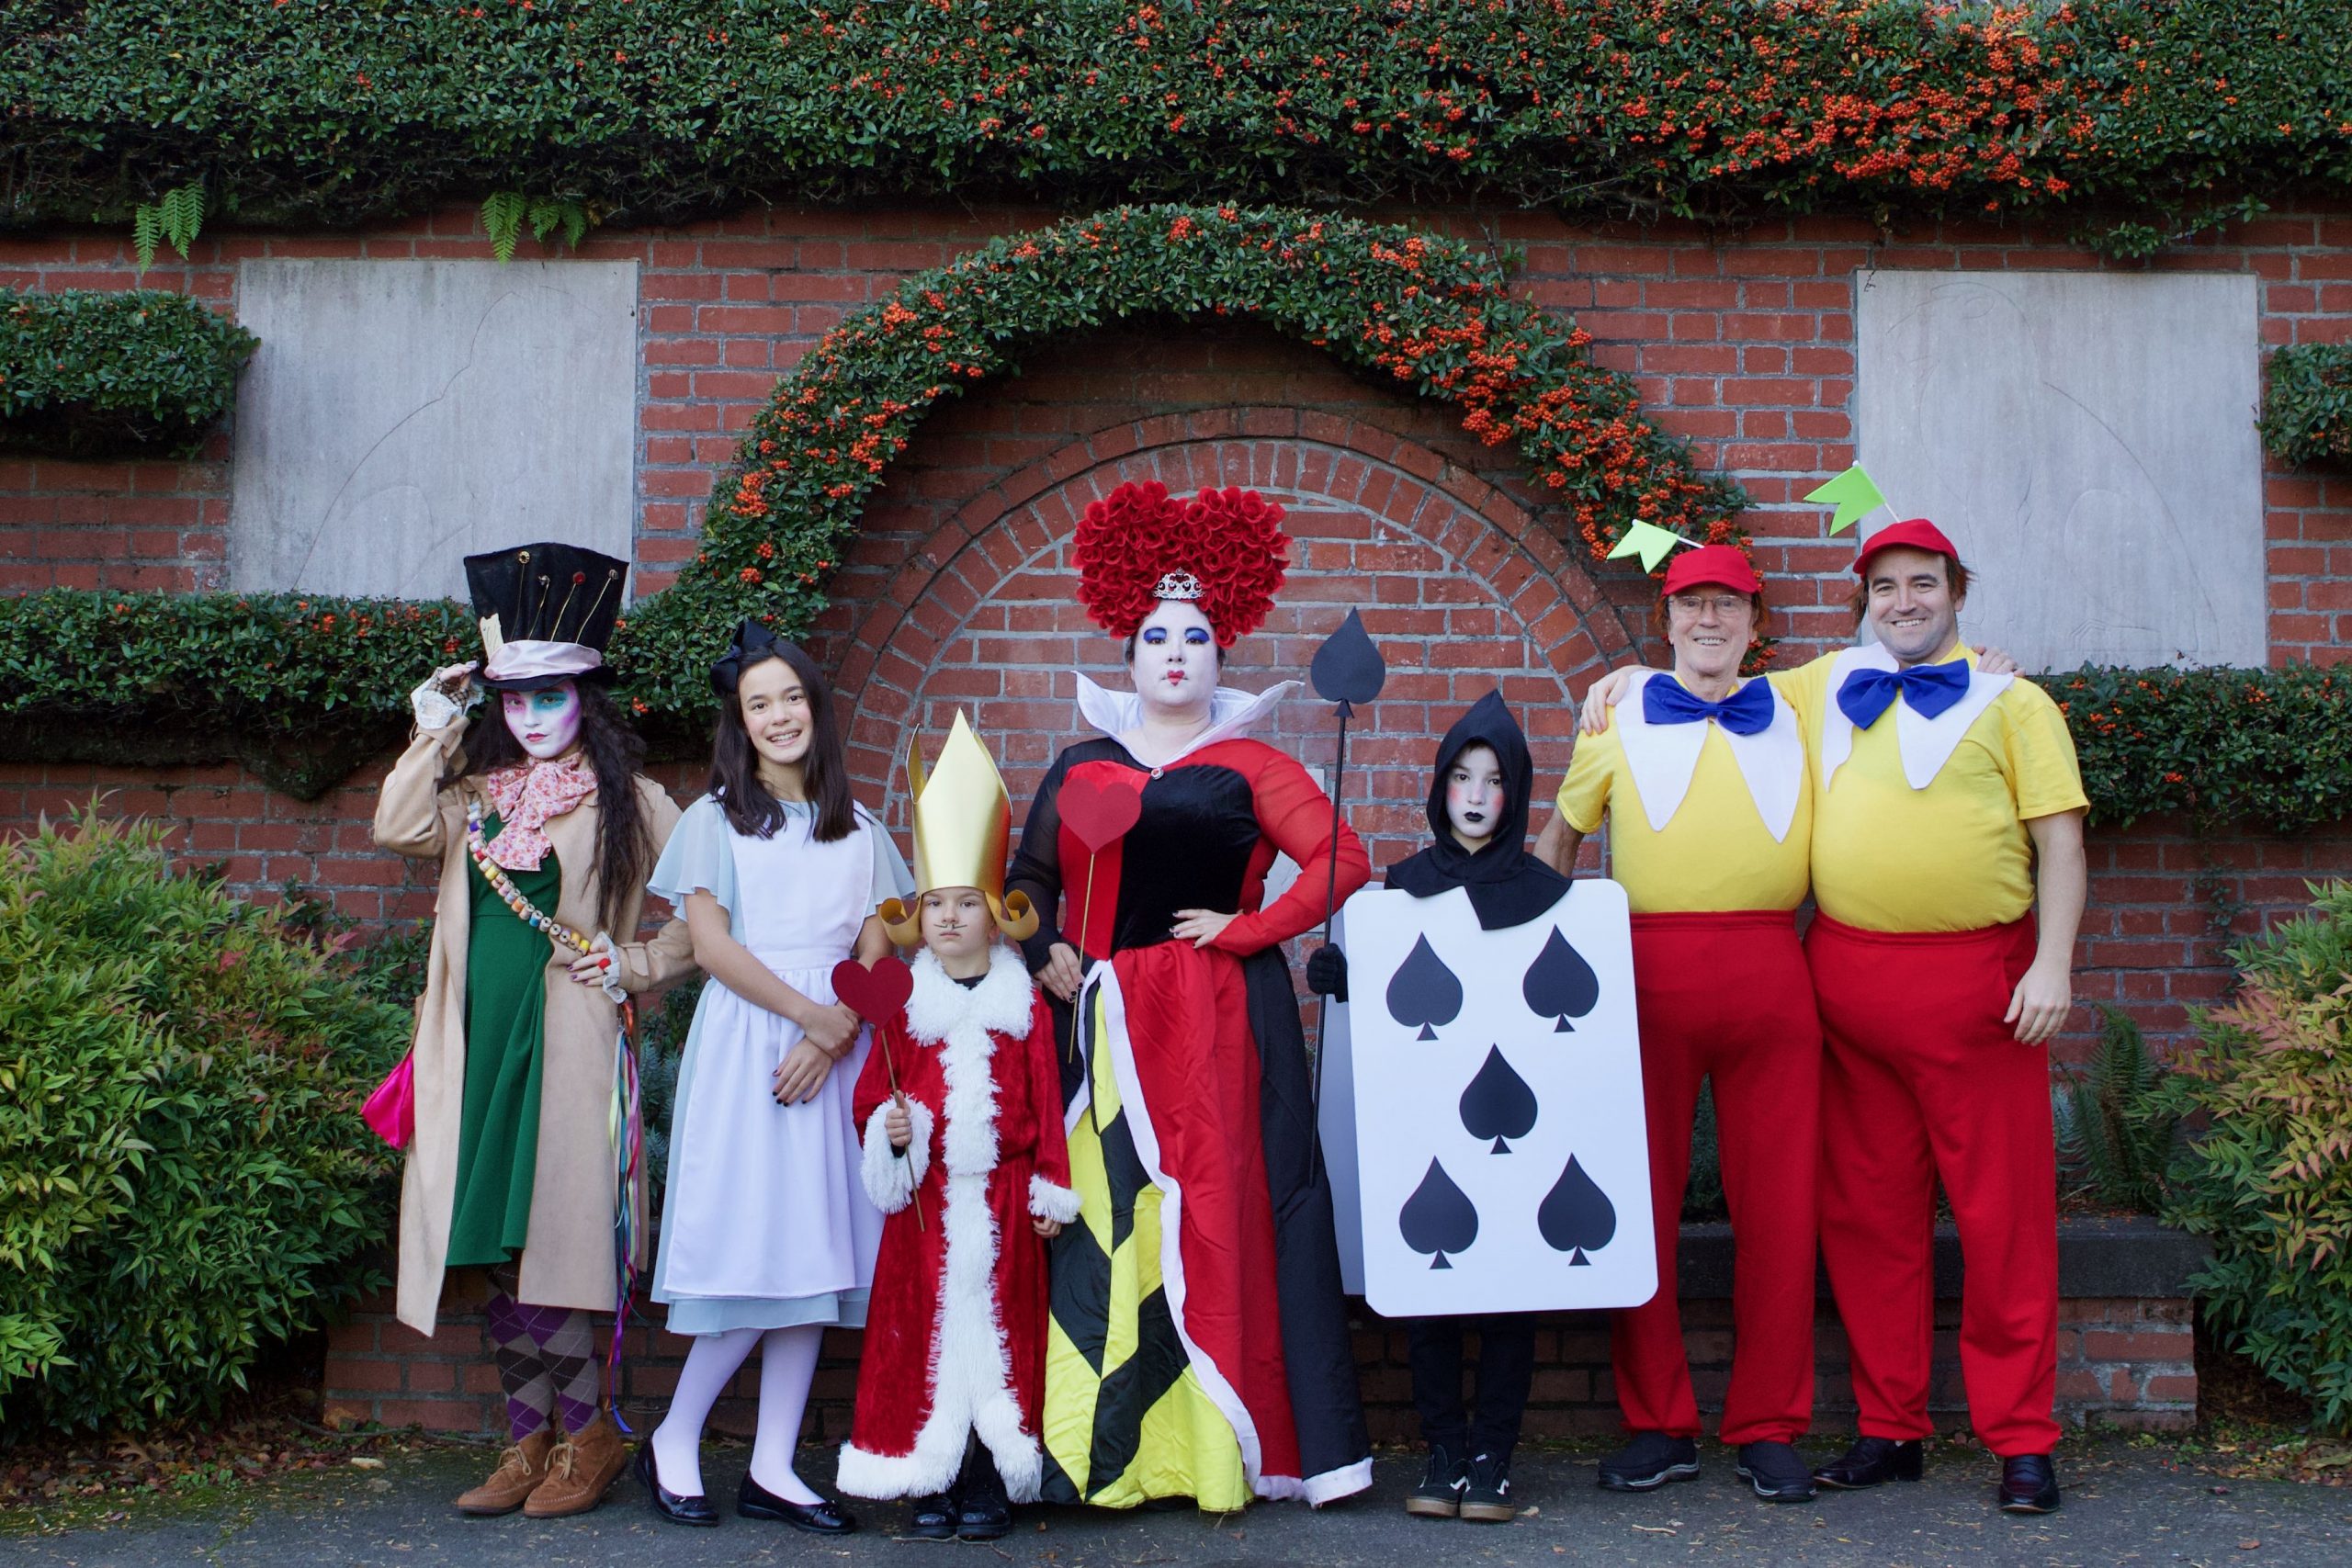 Coolest Homemade Alice in Wonderland Family Costume